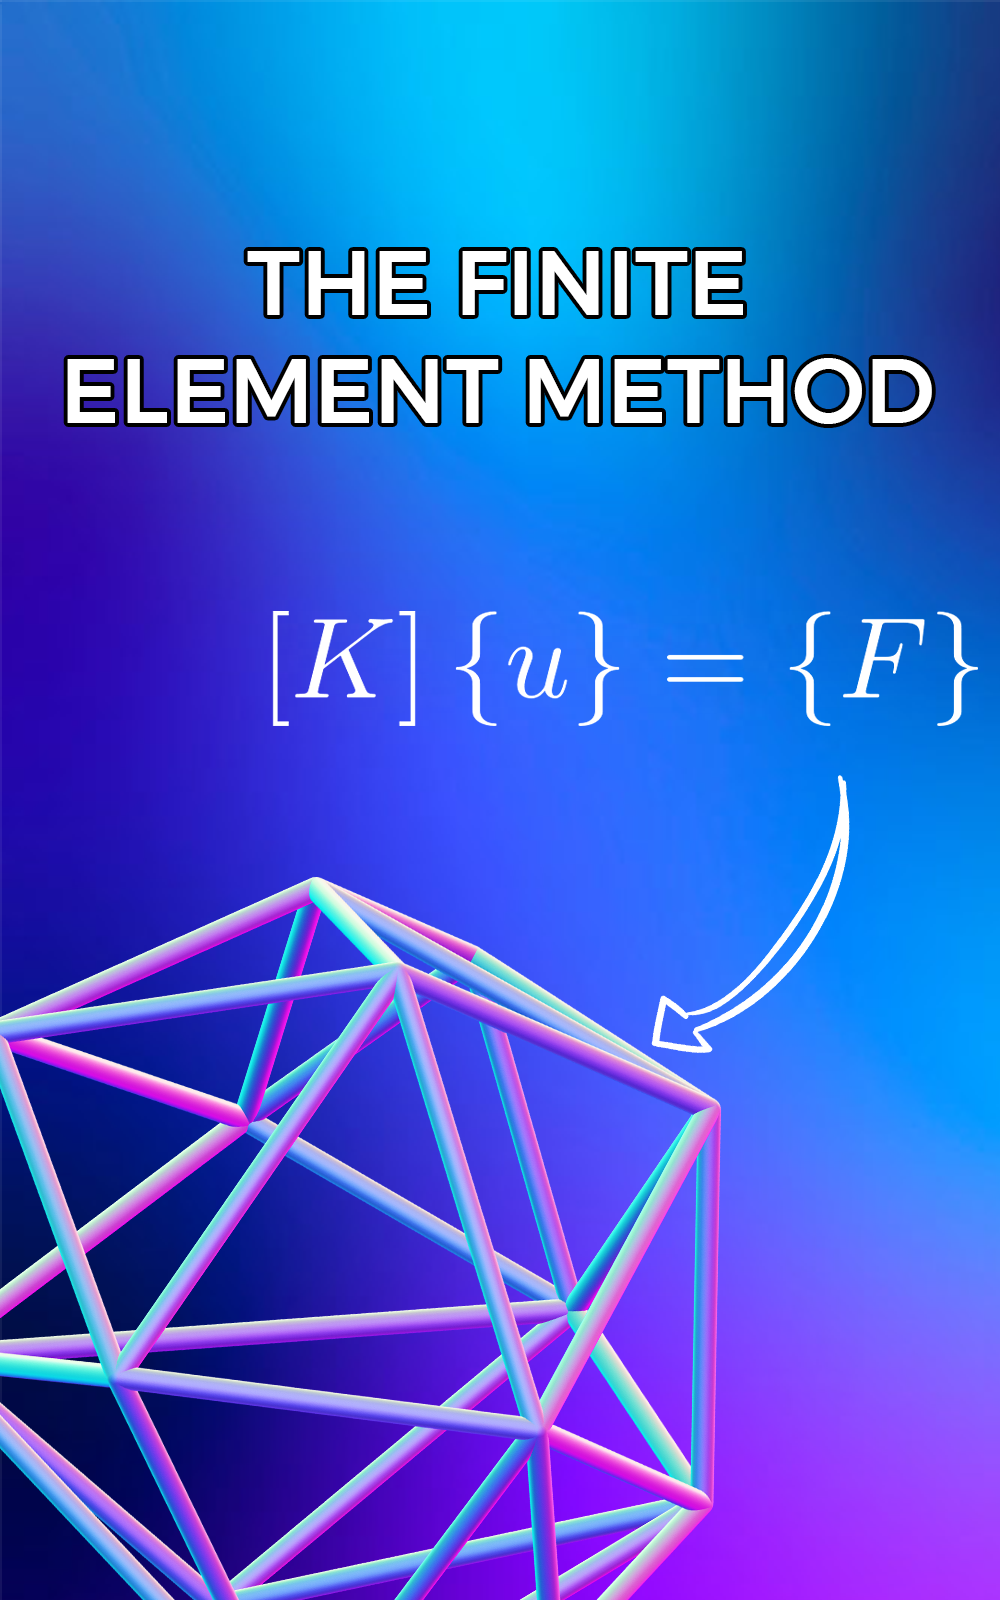 Books on the Finite Element Method (FEM)📚